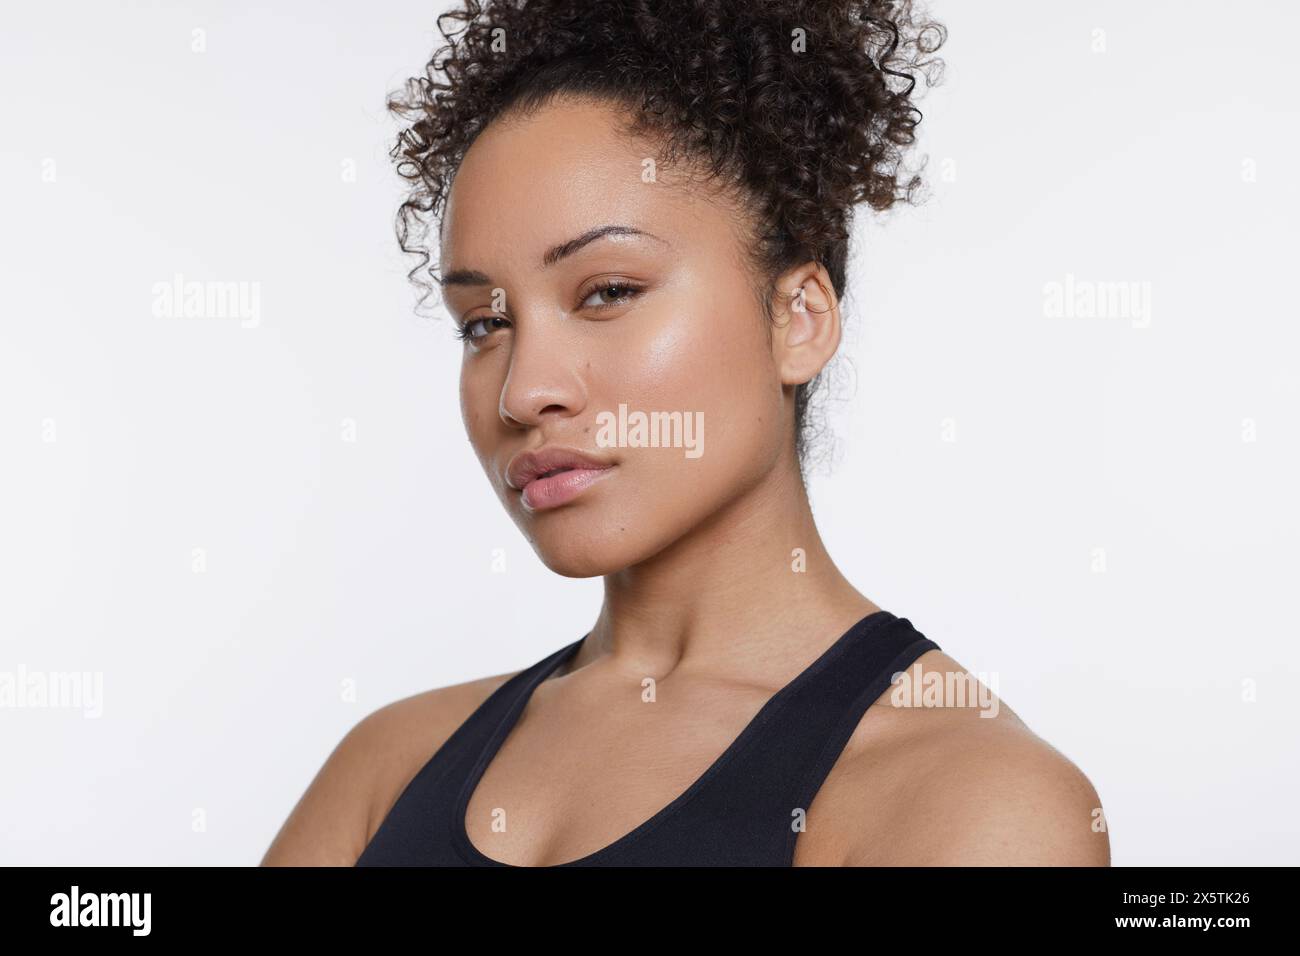 Studio portrait of athletic woman in black top Stock Photo